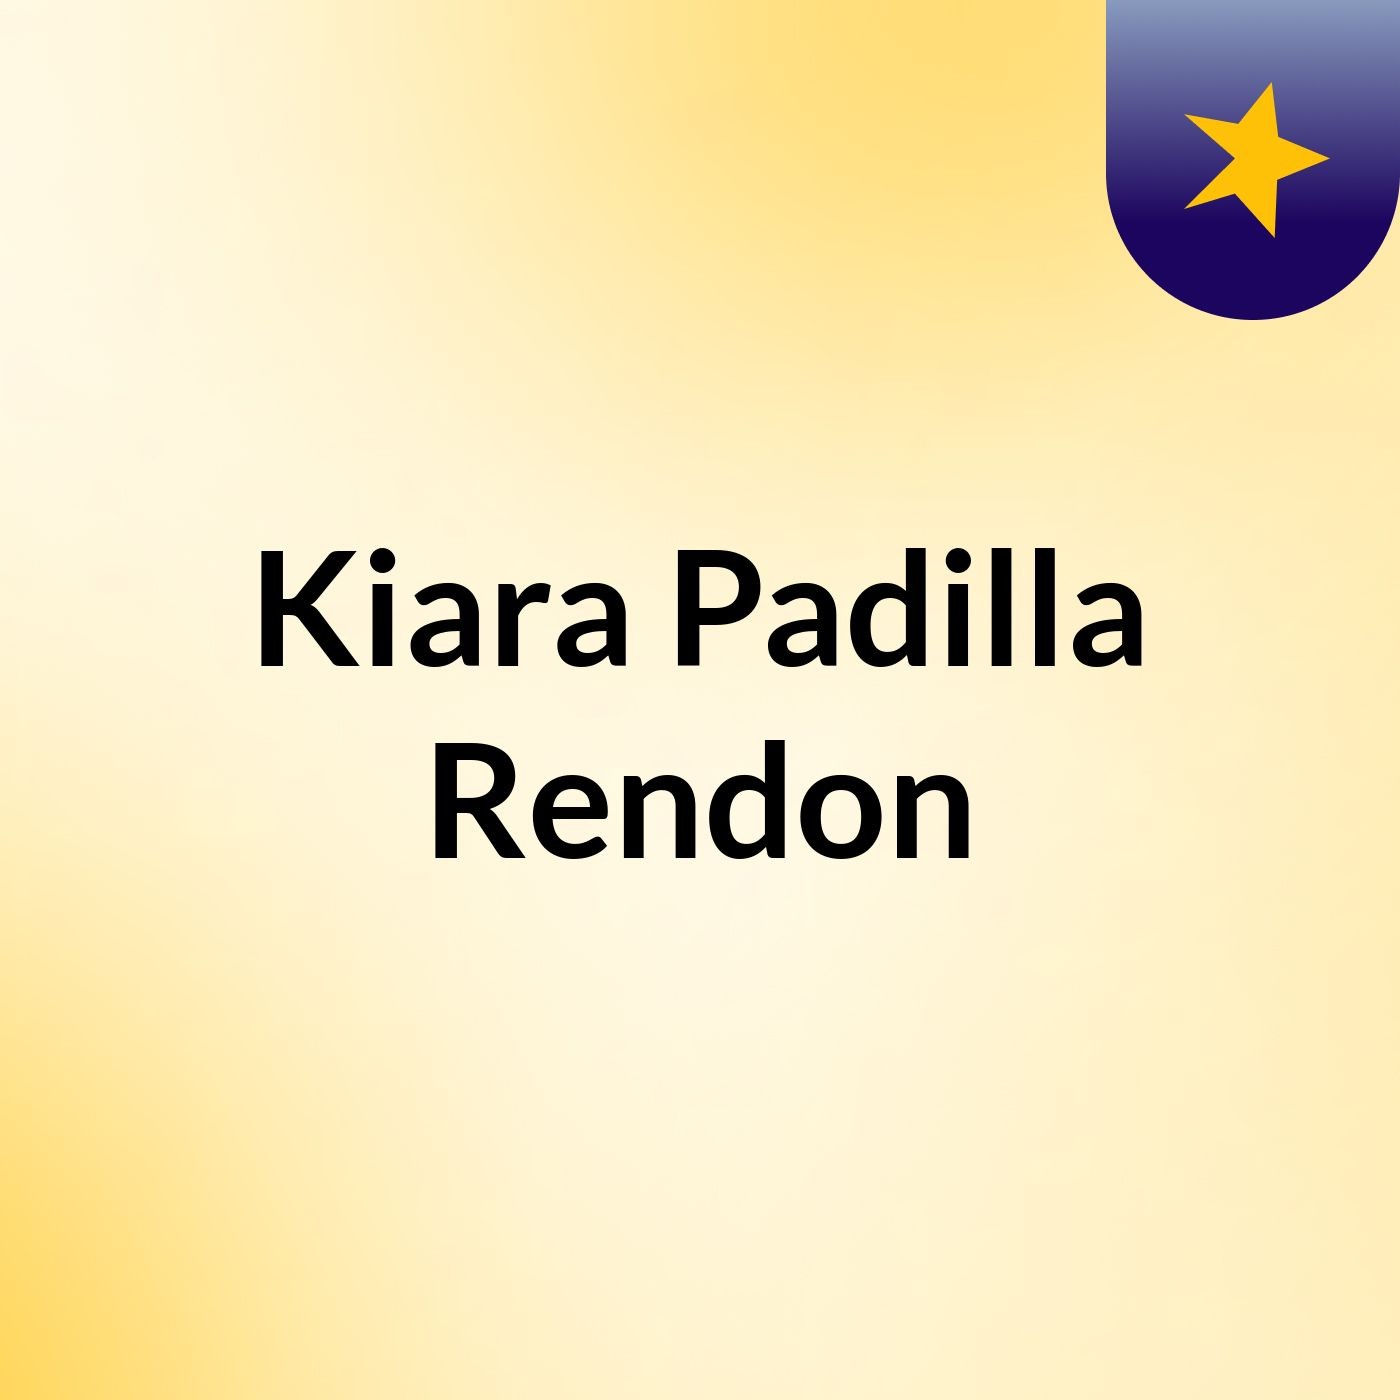 Kiara Padilla Rendon